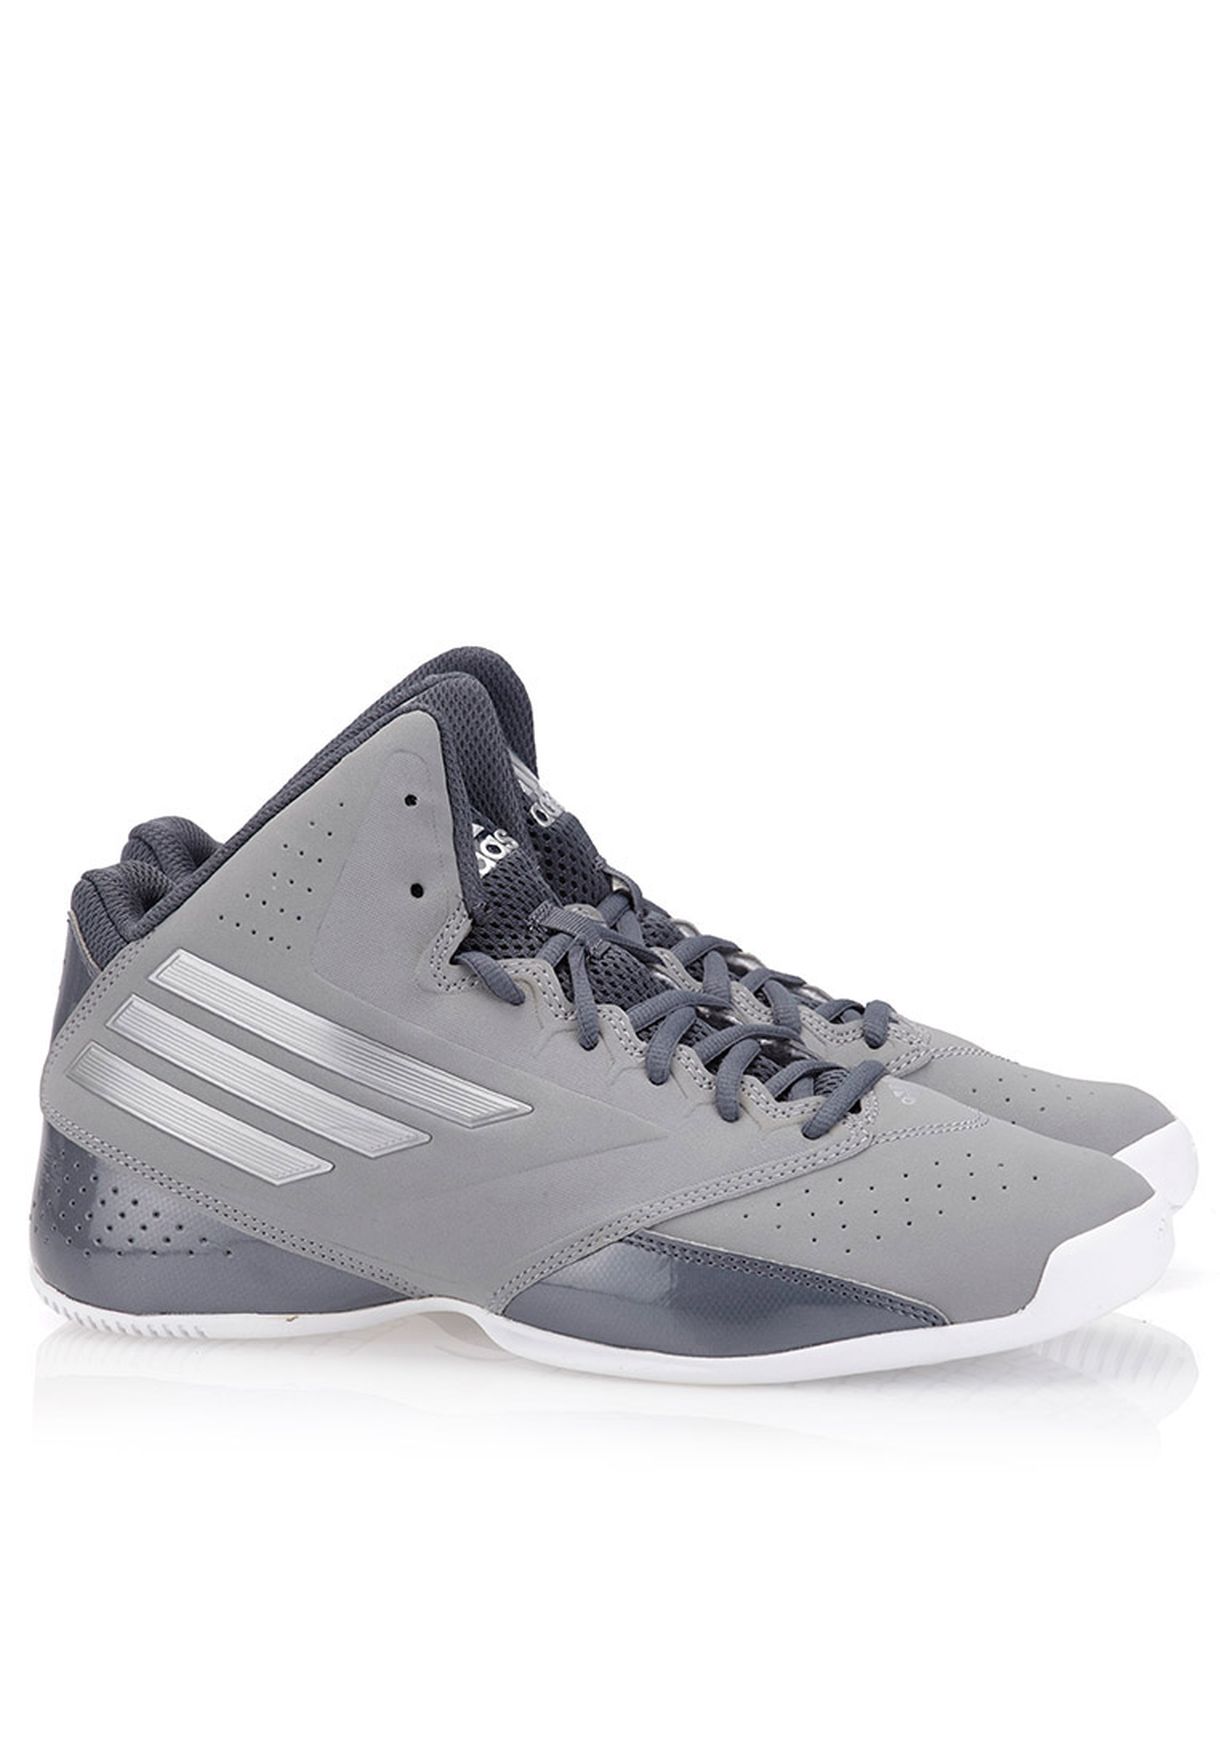 adidas 3 series basketball shoes